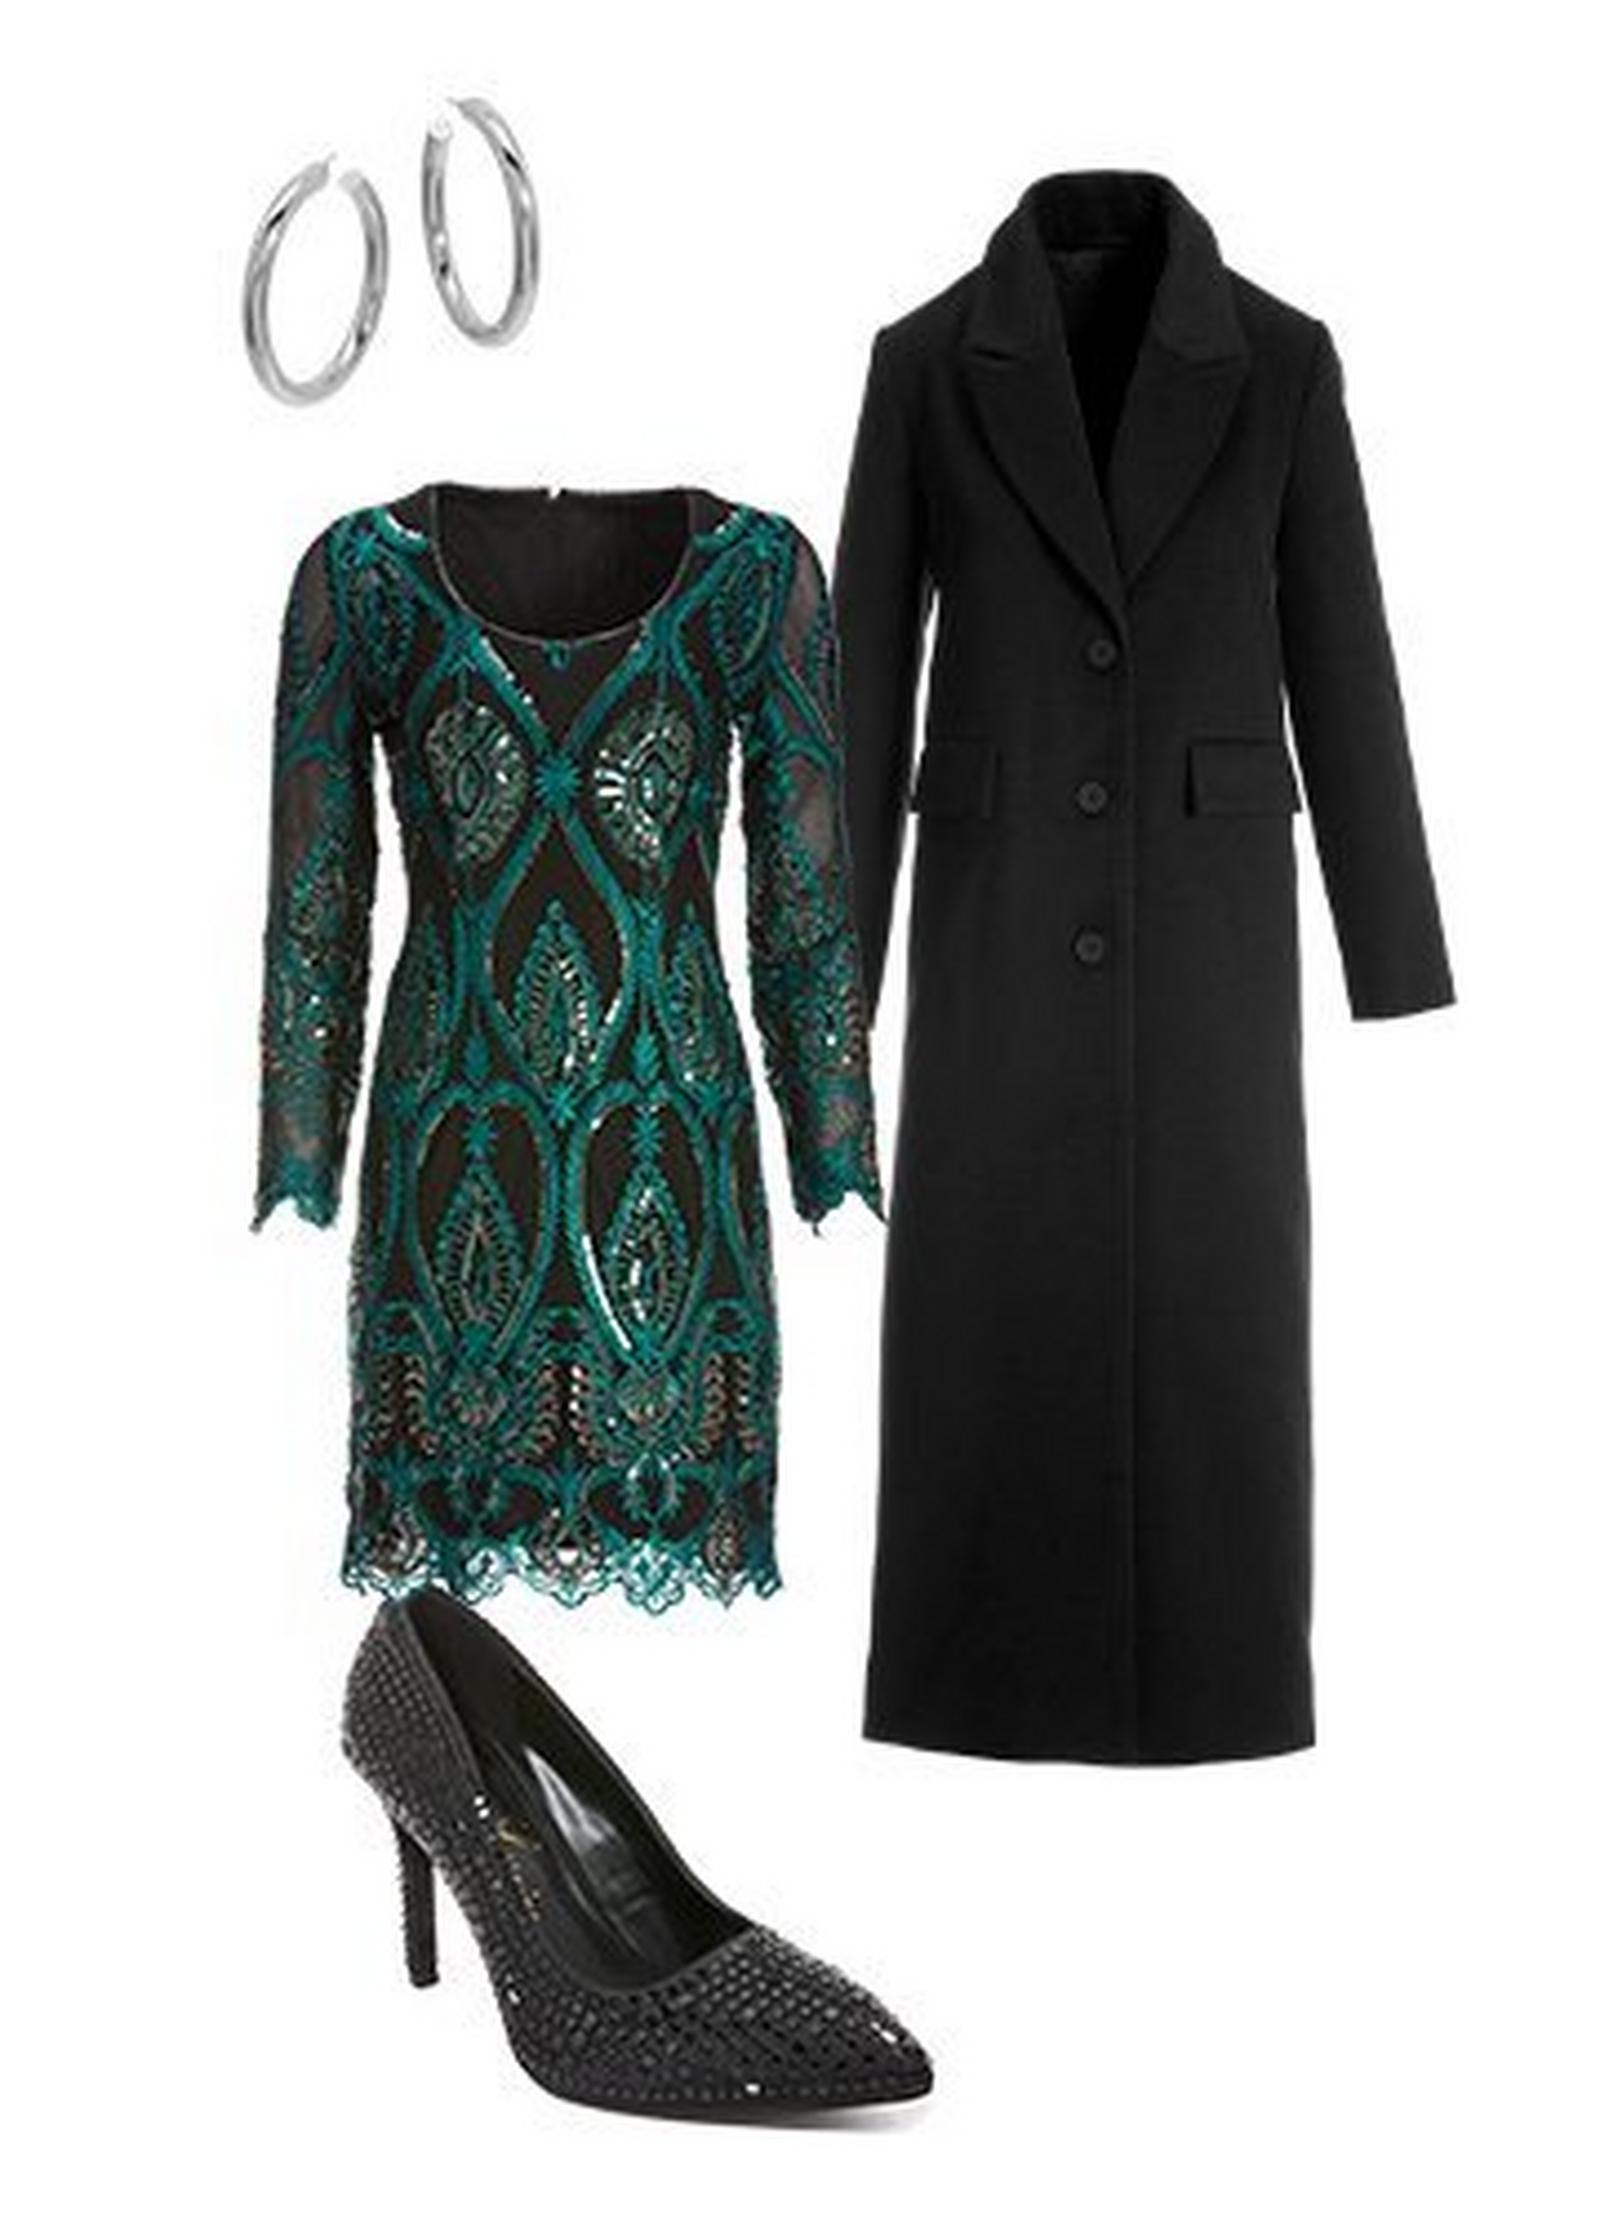 green and black sequin long-sleeve dress, black rhinestone embellished pumps, silver hoop earrings, and black faux-wool long coat.